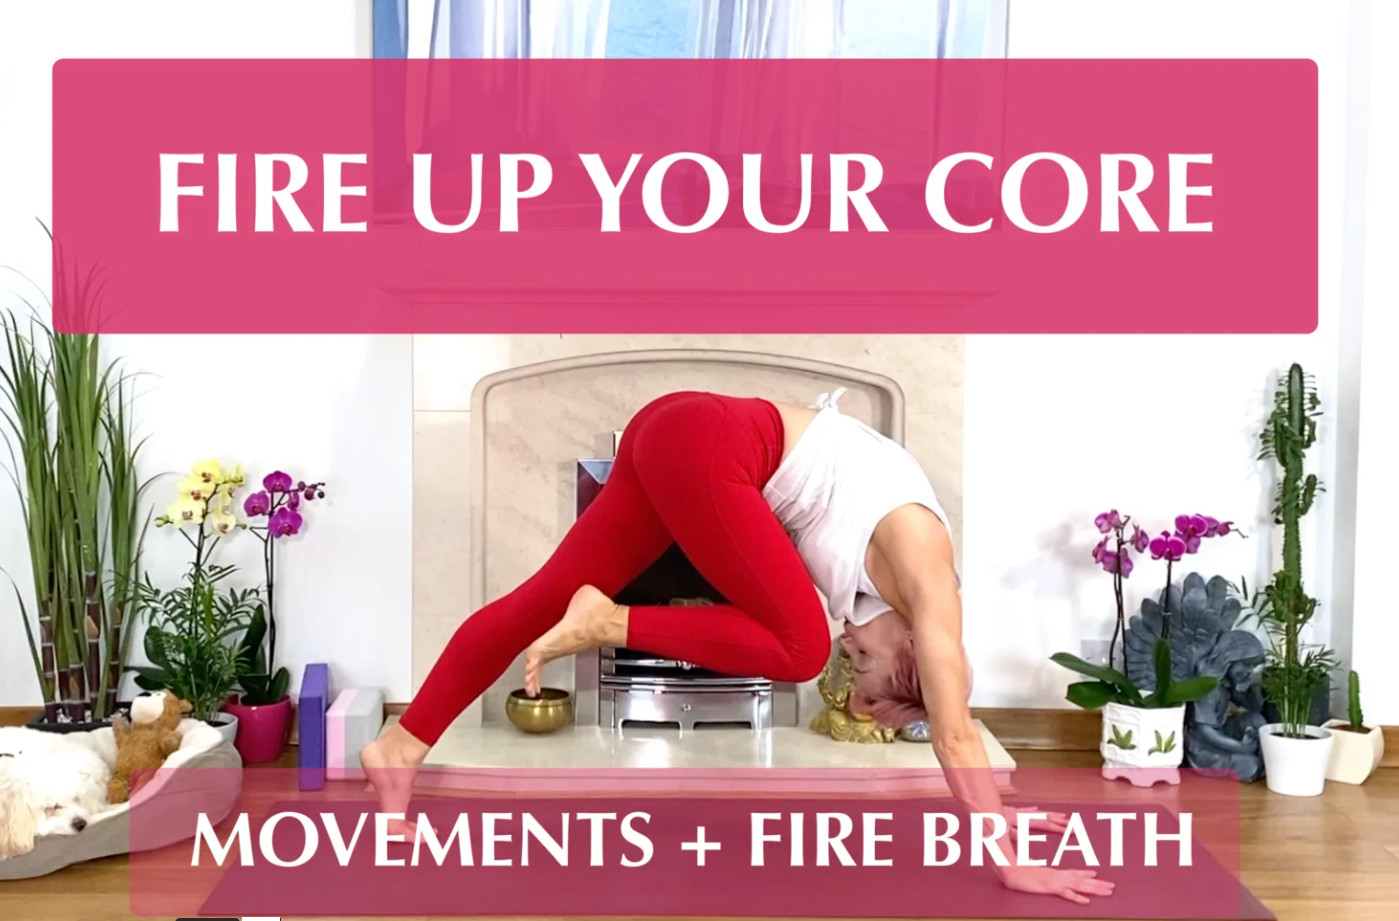 Olga Oakenfold - Fire Up Your Core. Movements + Fire Breath (56 min)